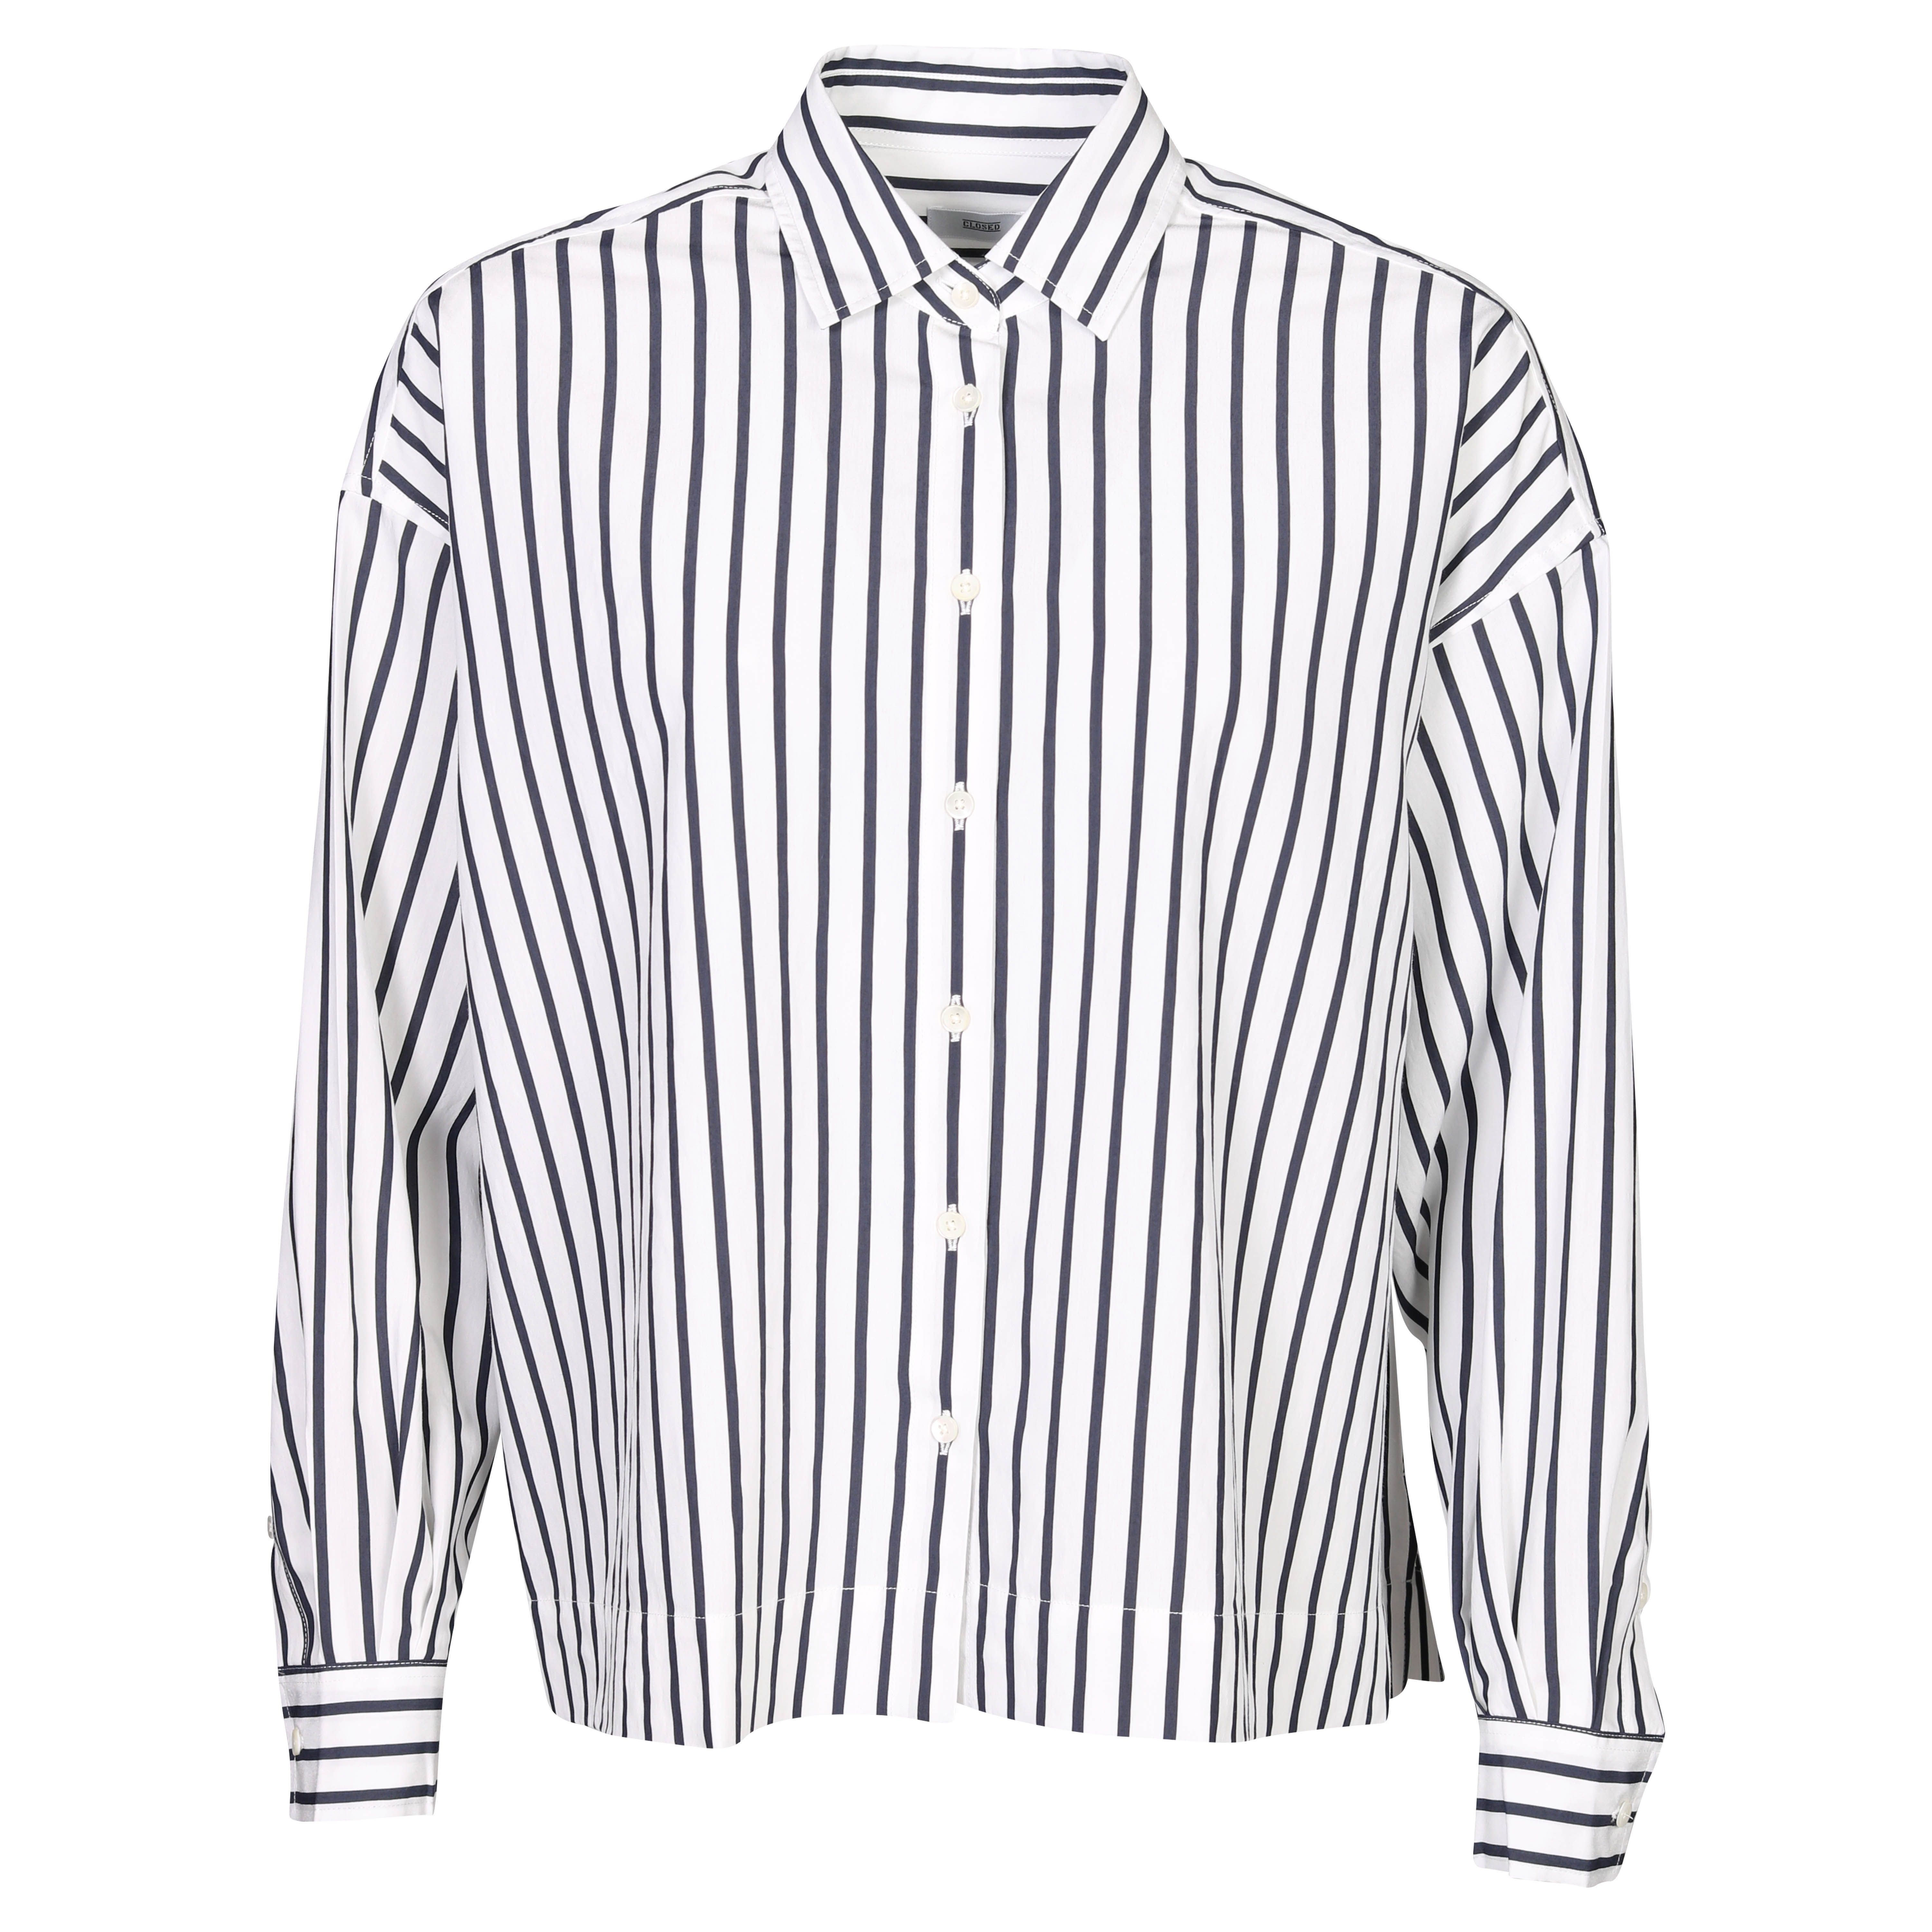 Closed Owen Gathered Shirt in dark night striped XS